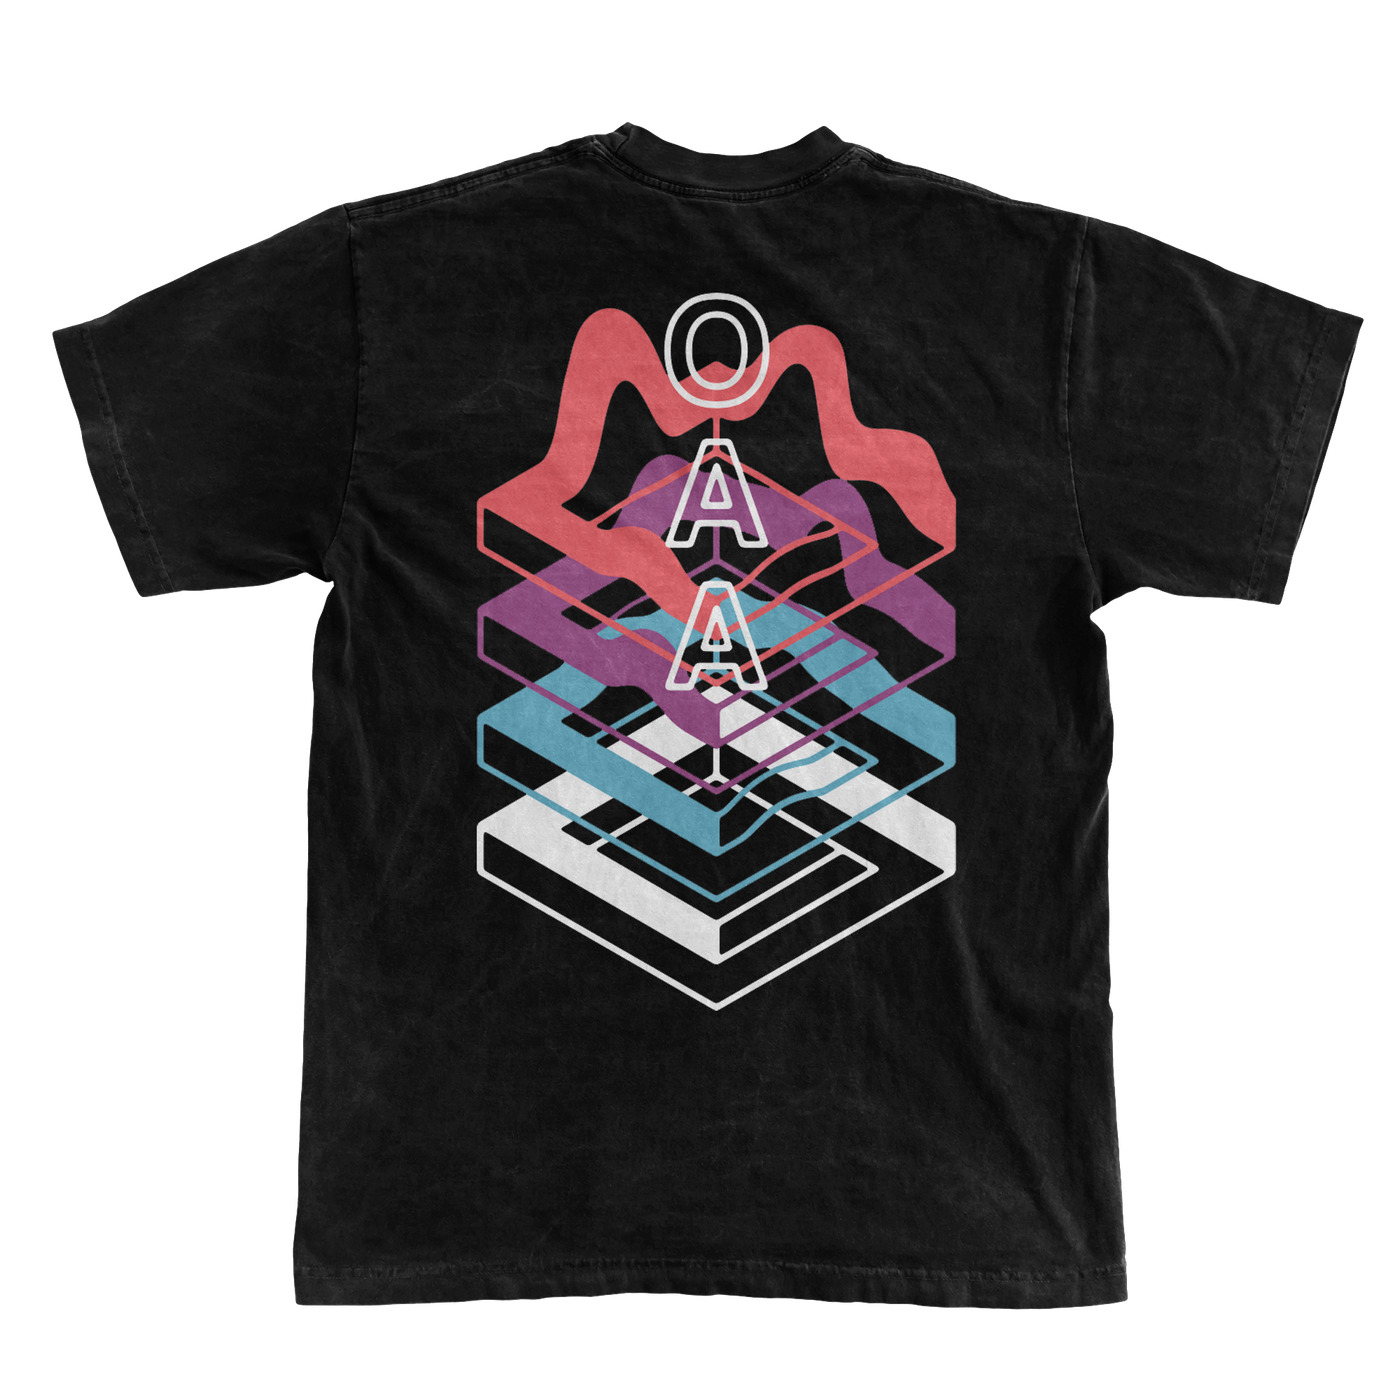 "OAA Shapes" T-Shirt